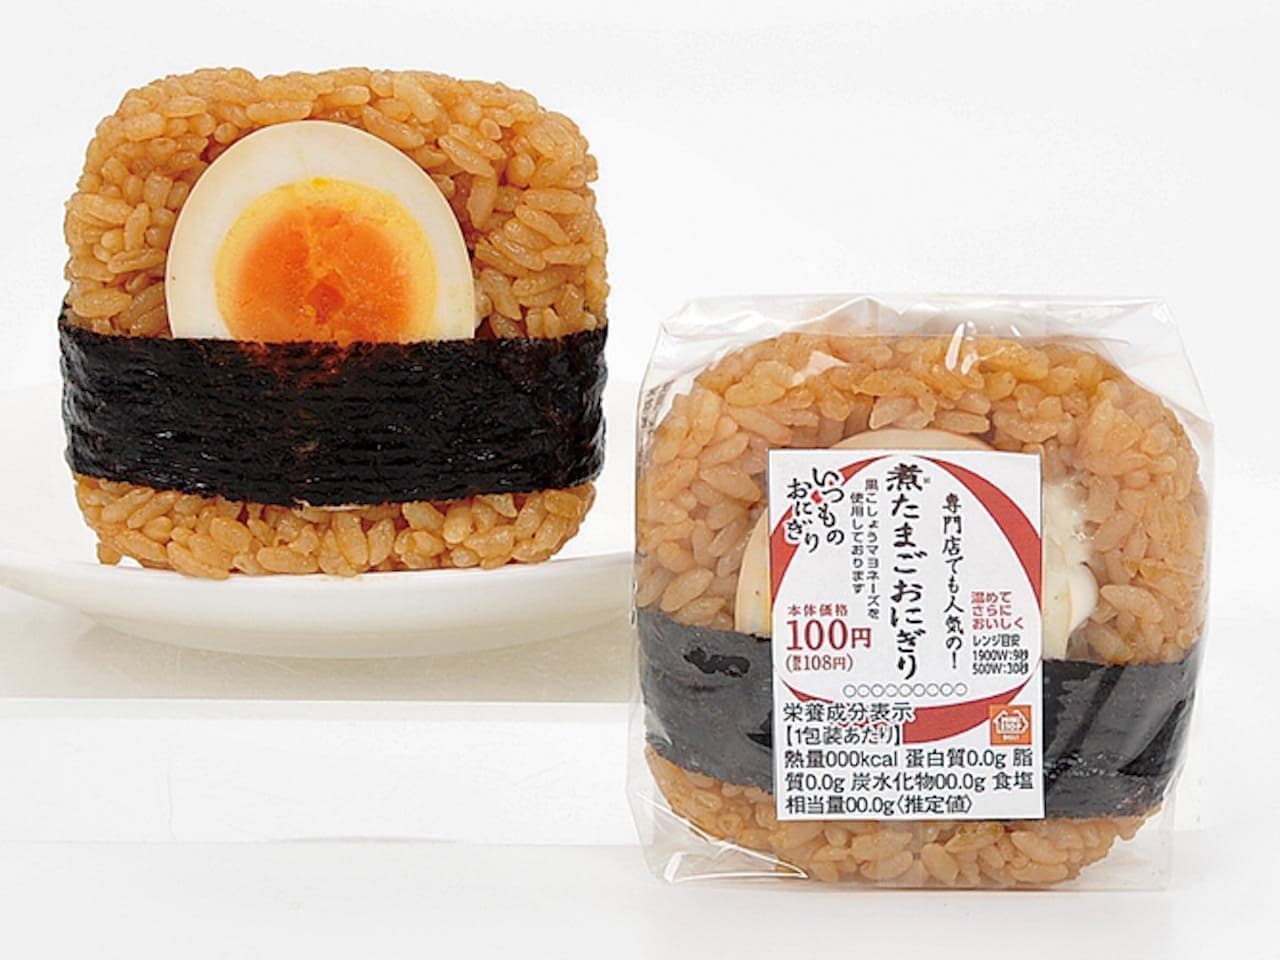 Ministop "Ajimusubi Boiled Egg Rice Ball"